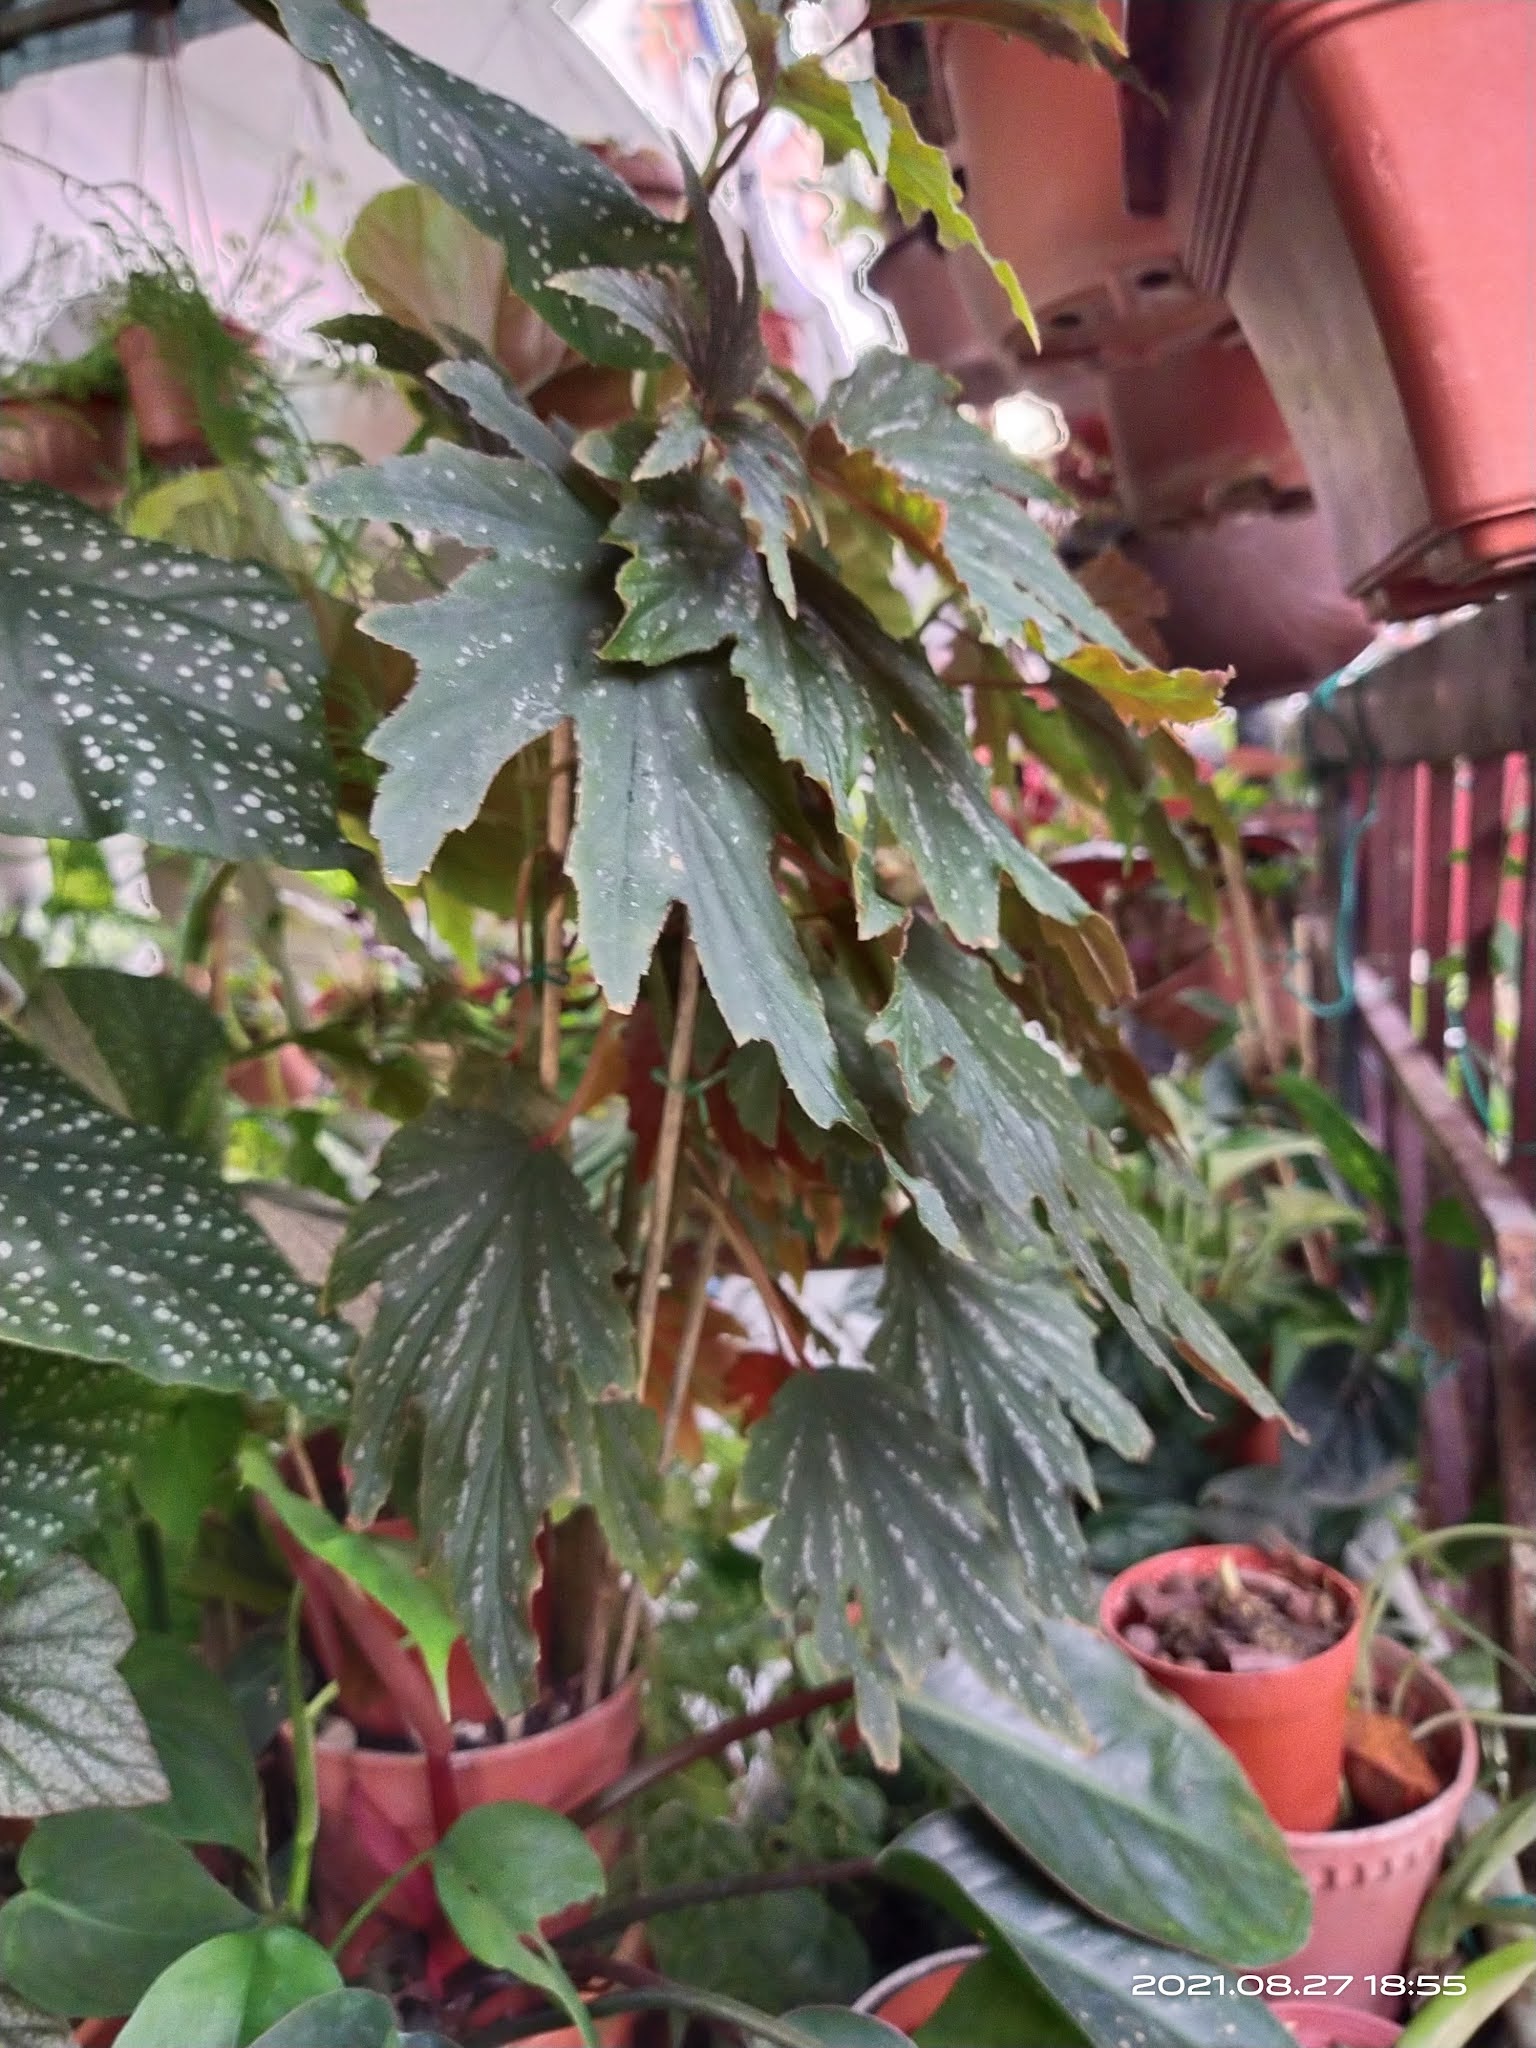 Garden Chronicles : Repot Begonia to Correct Potting Medium